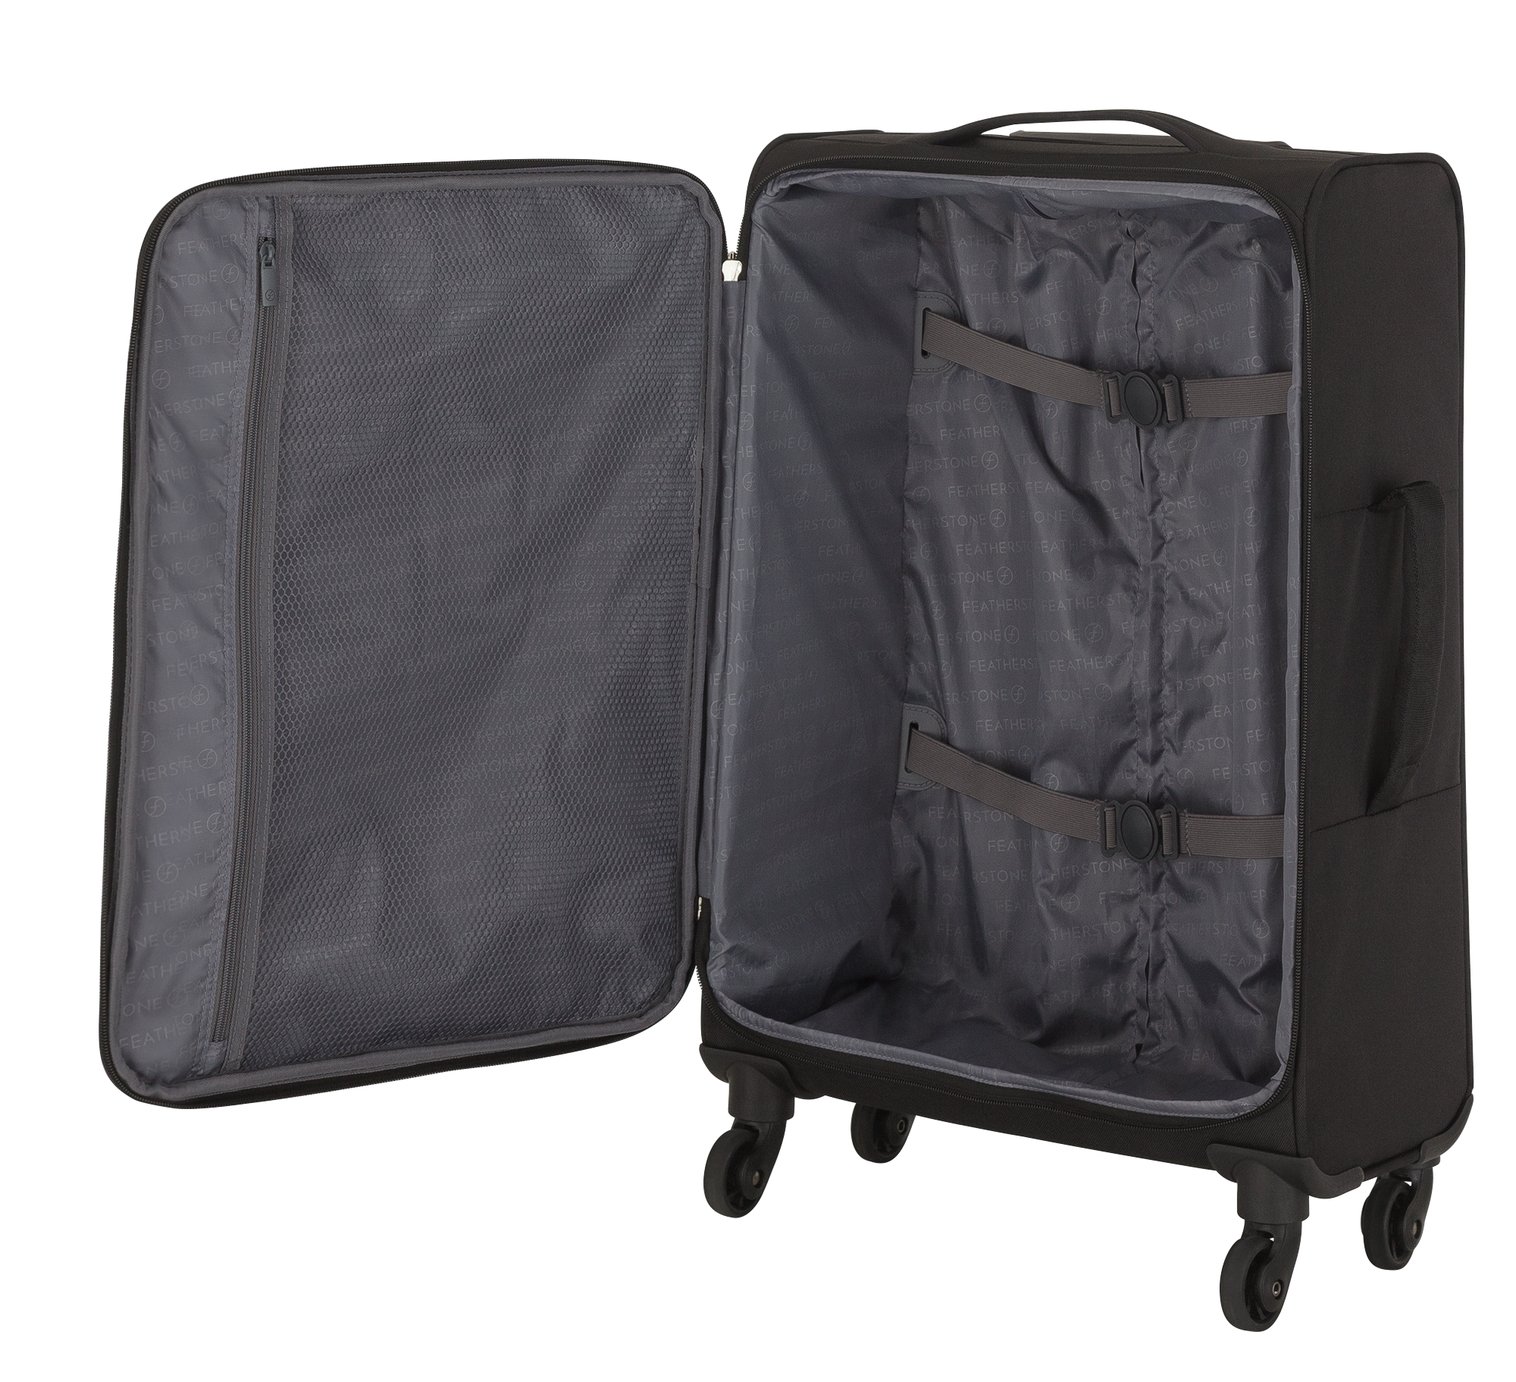 Featherstone 4 Wheel Soft Medium Suitcase - Black